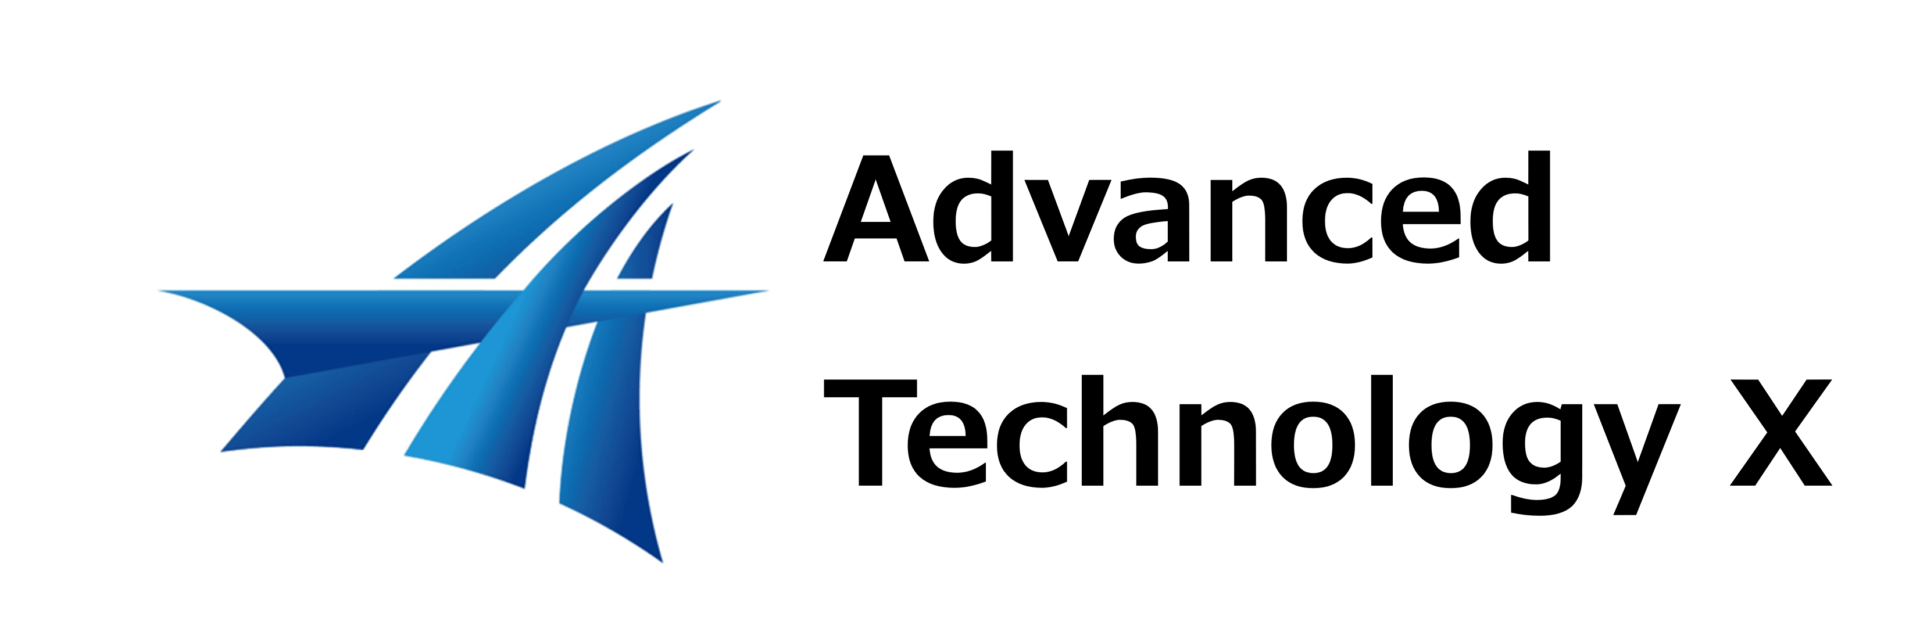 Advanced Technology X